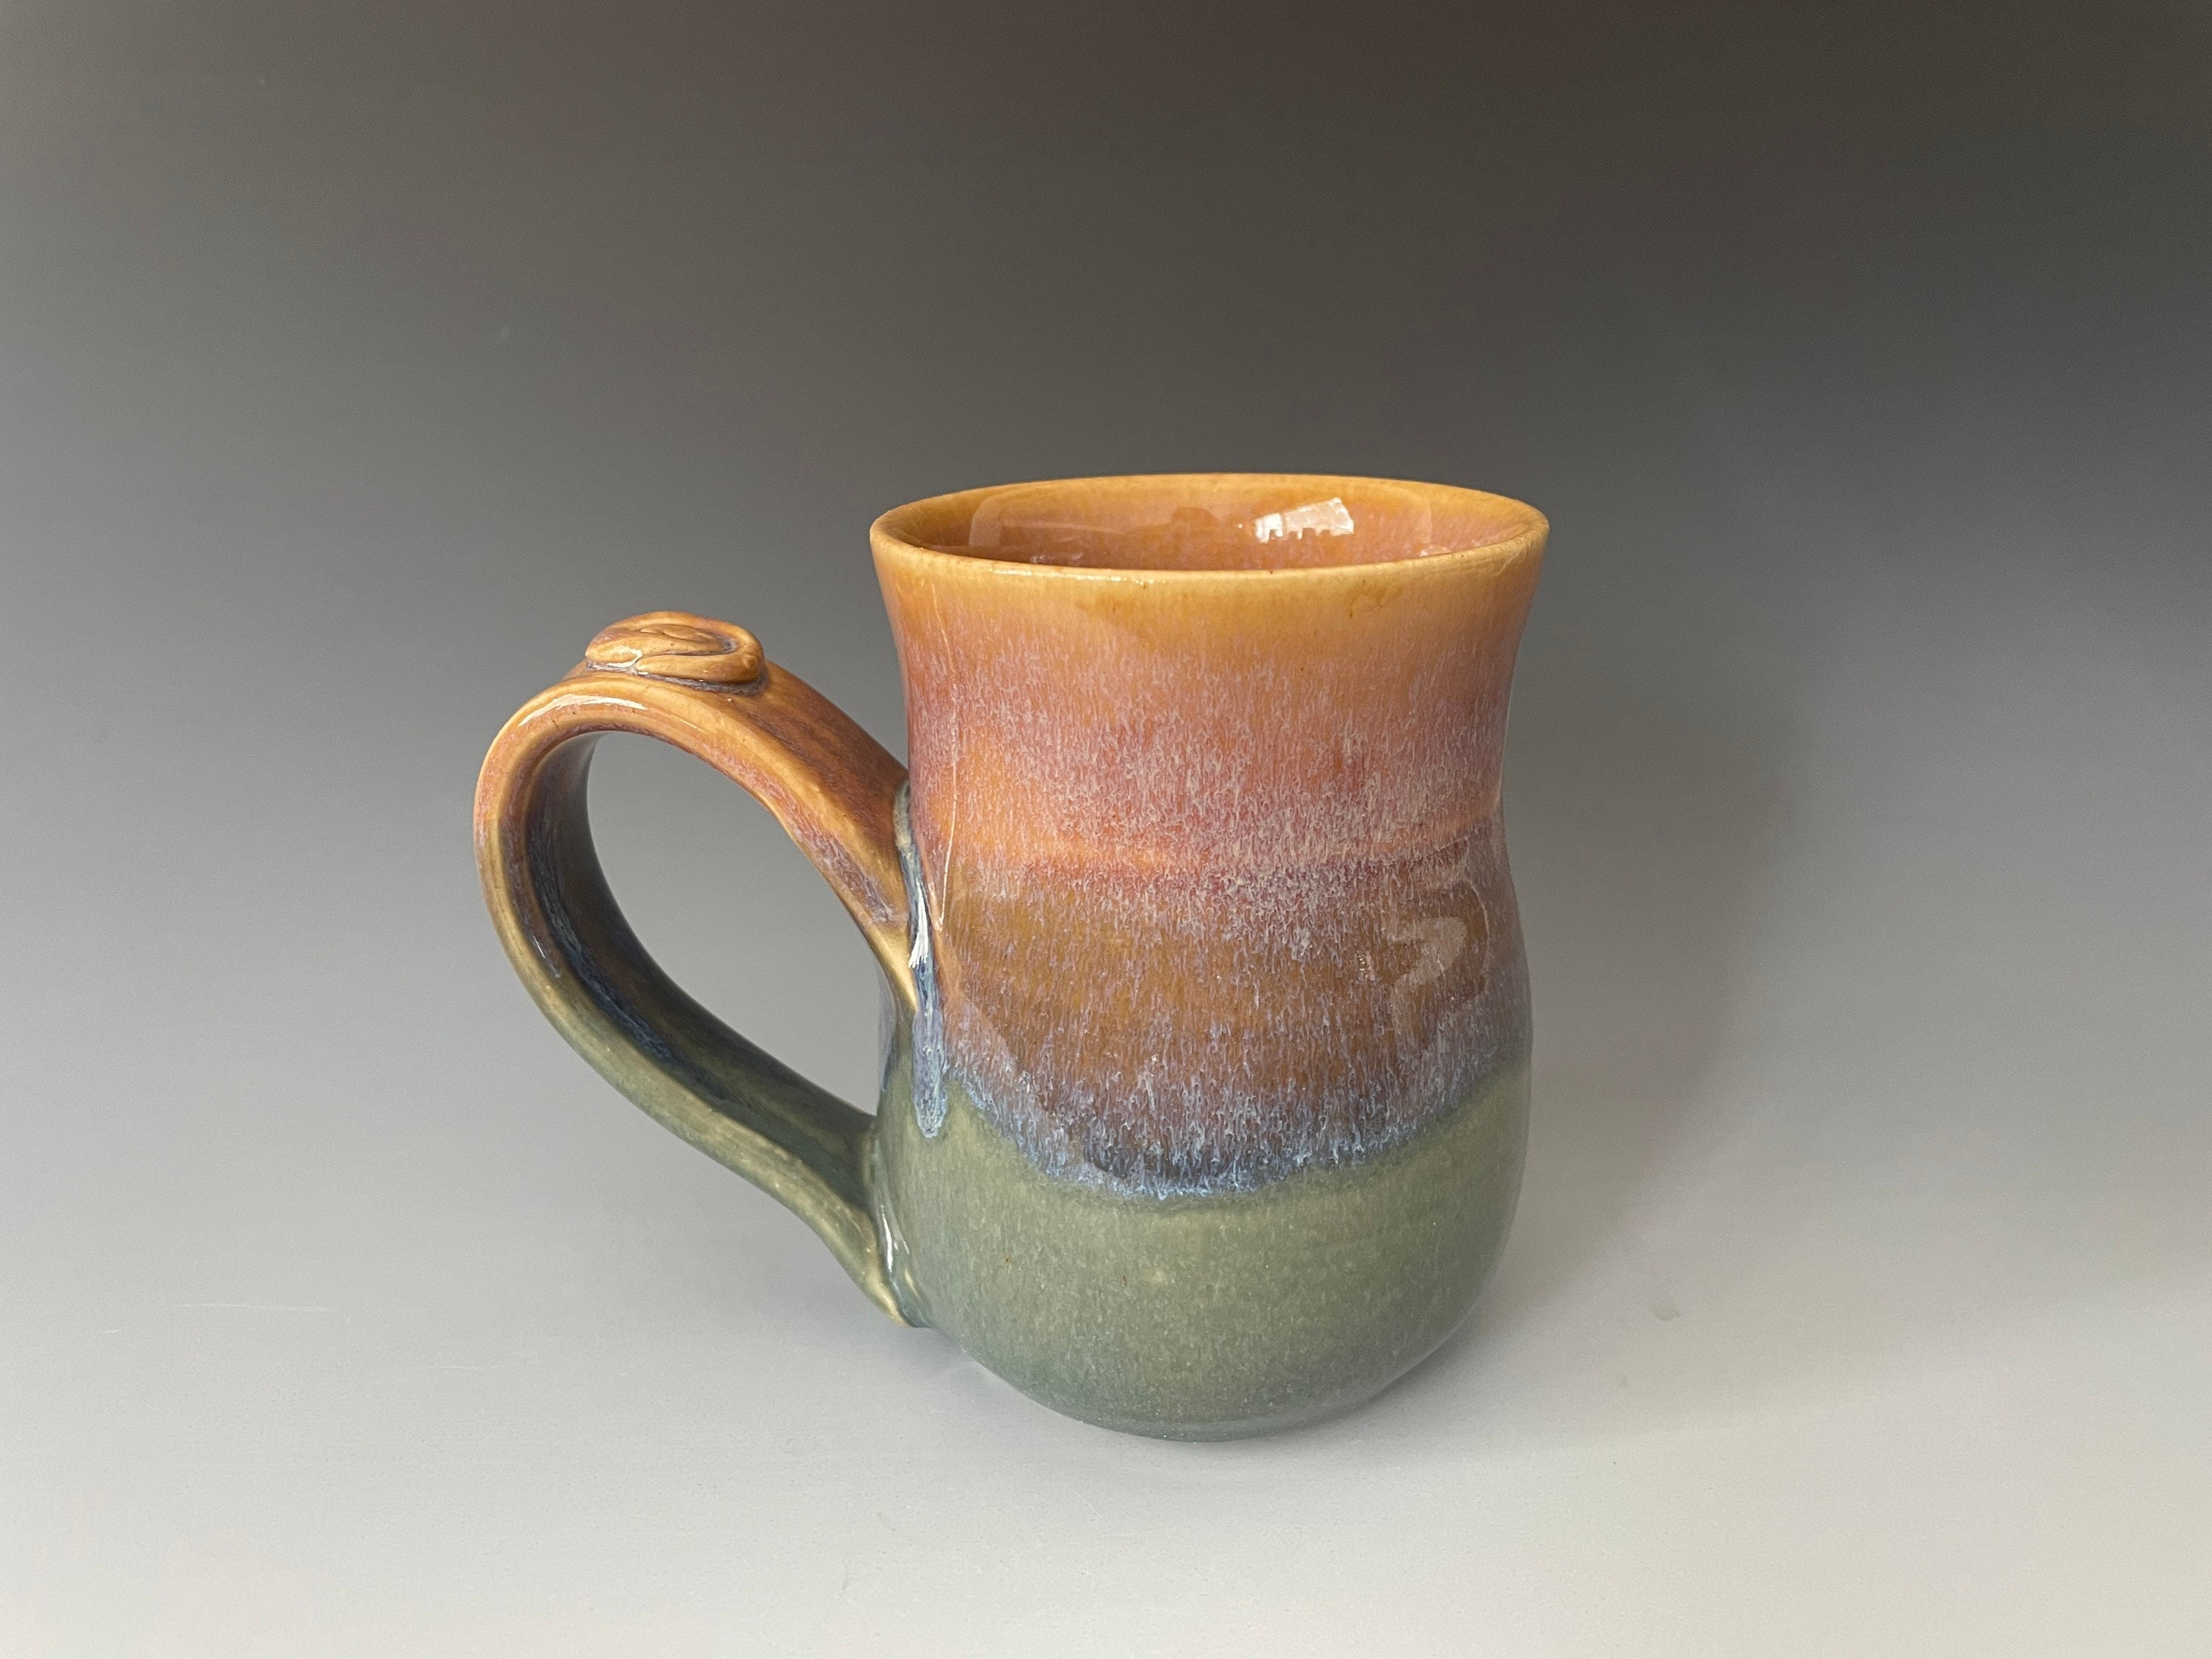 Blue Pottery Mug, Handmade ceramic Mug, Office Mug, Coffee lover gift,  Vintage Mug, Gift for her/him, Personalized gift, Unique Mug